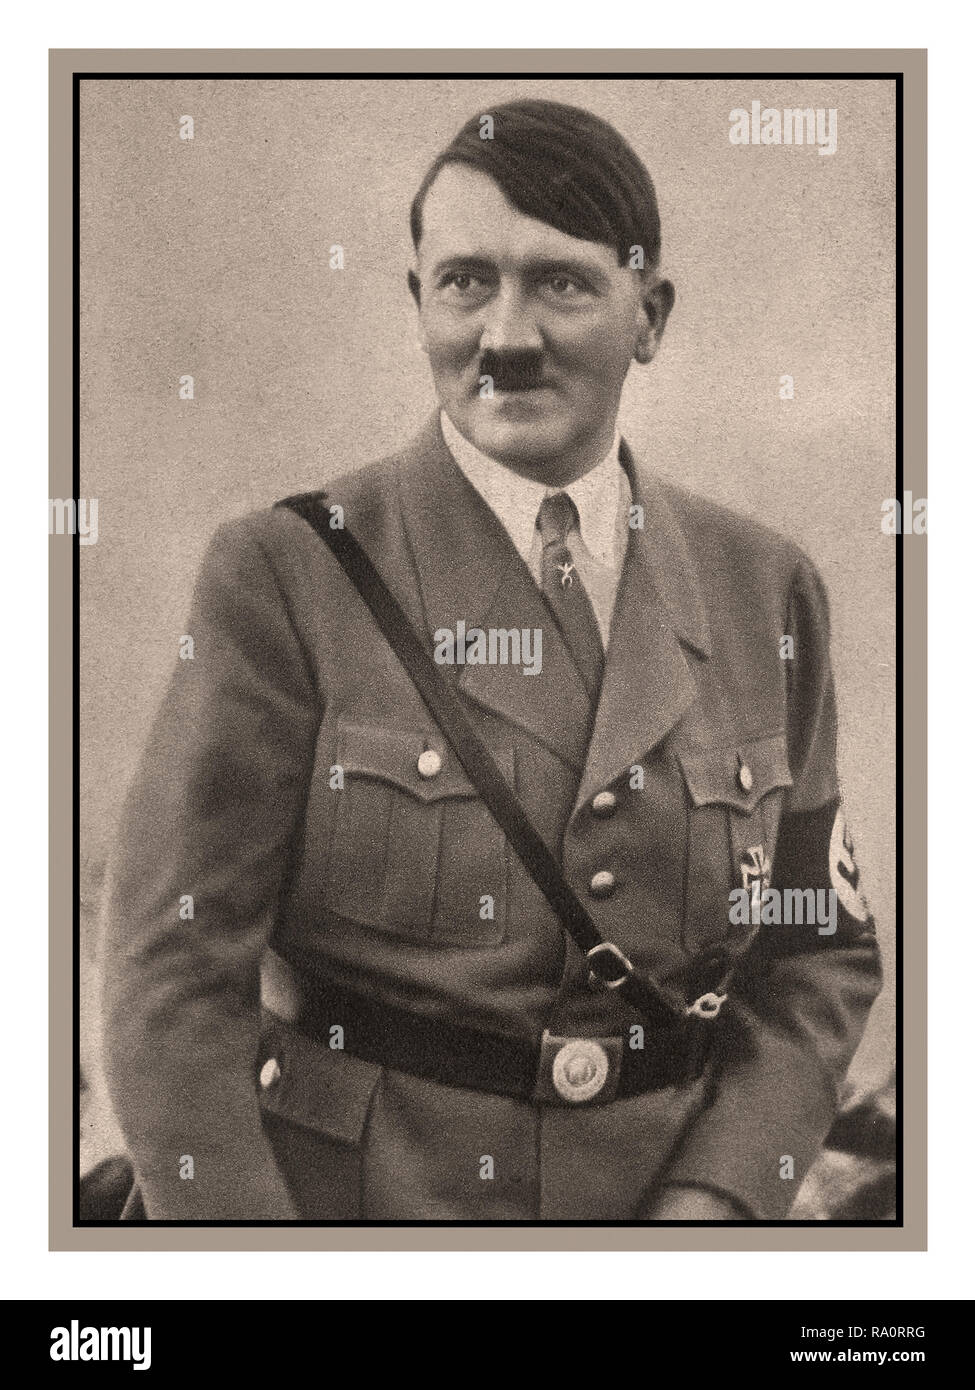 ADOLF HITLER 1933 Propaganda Nazi postcard image of Adolf Hitler in uniform with Swastika armband Stock Photo